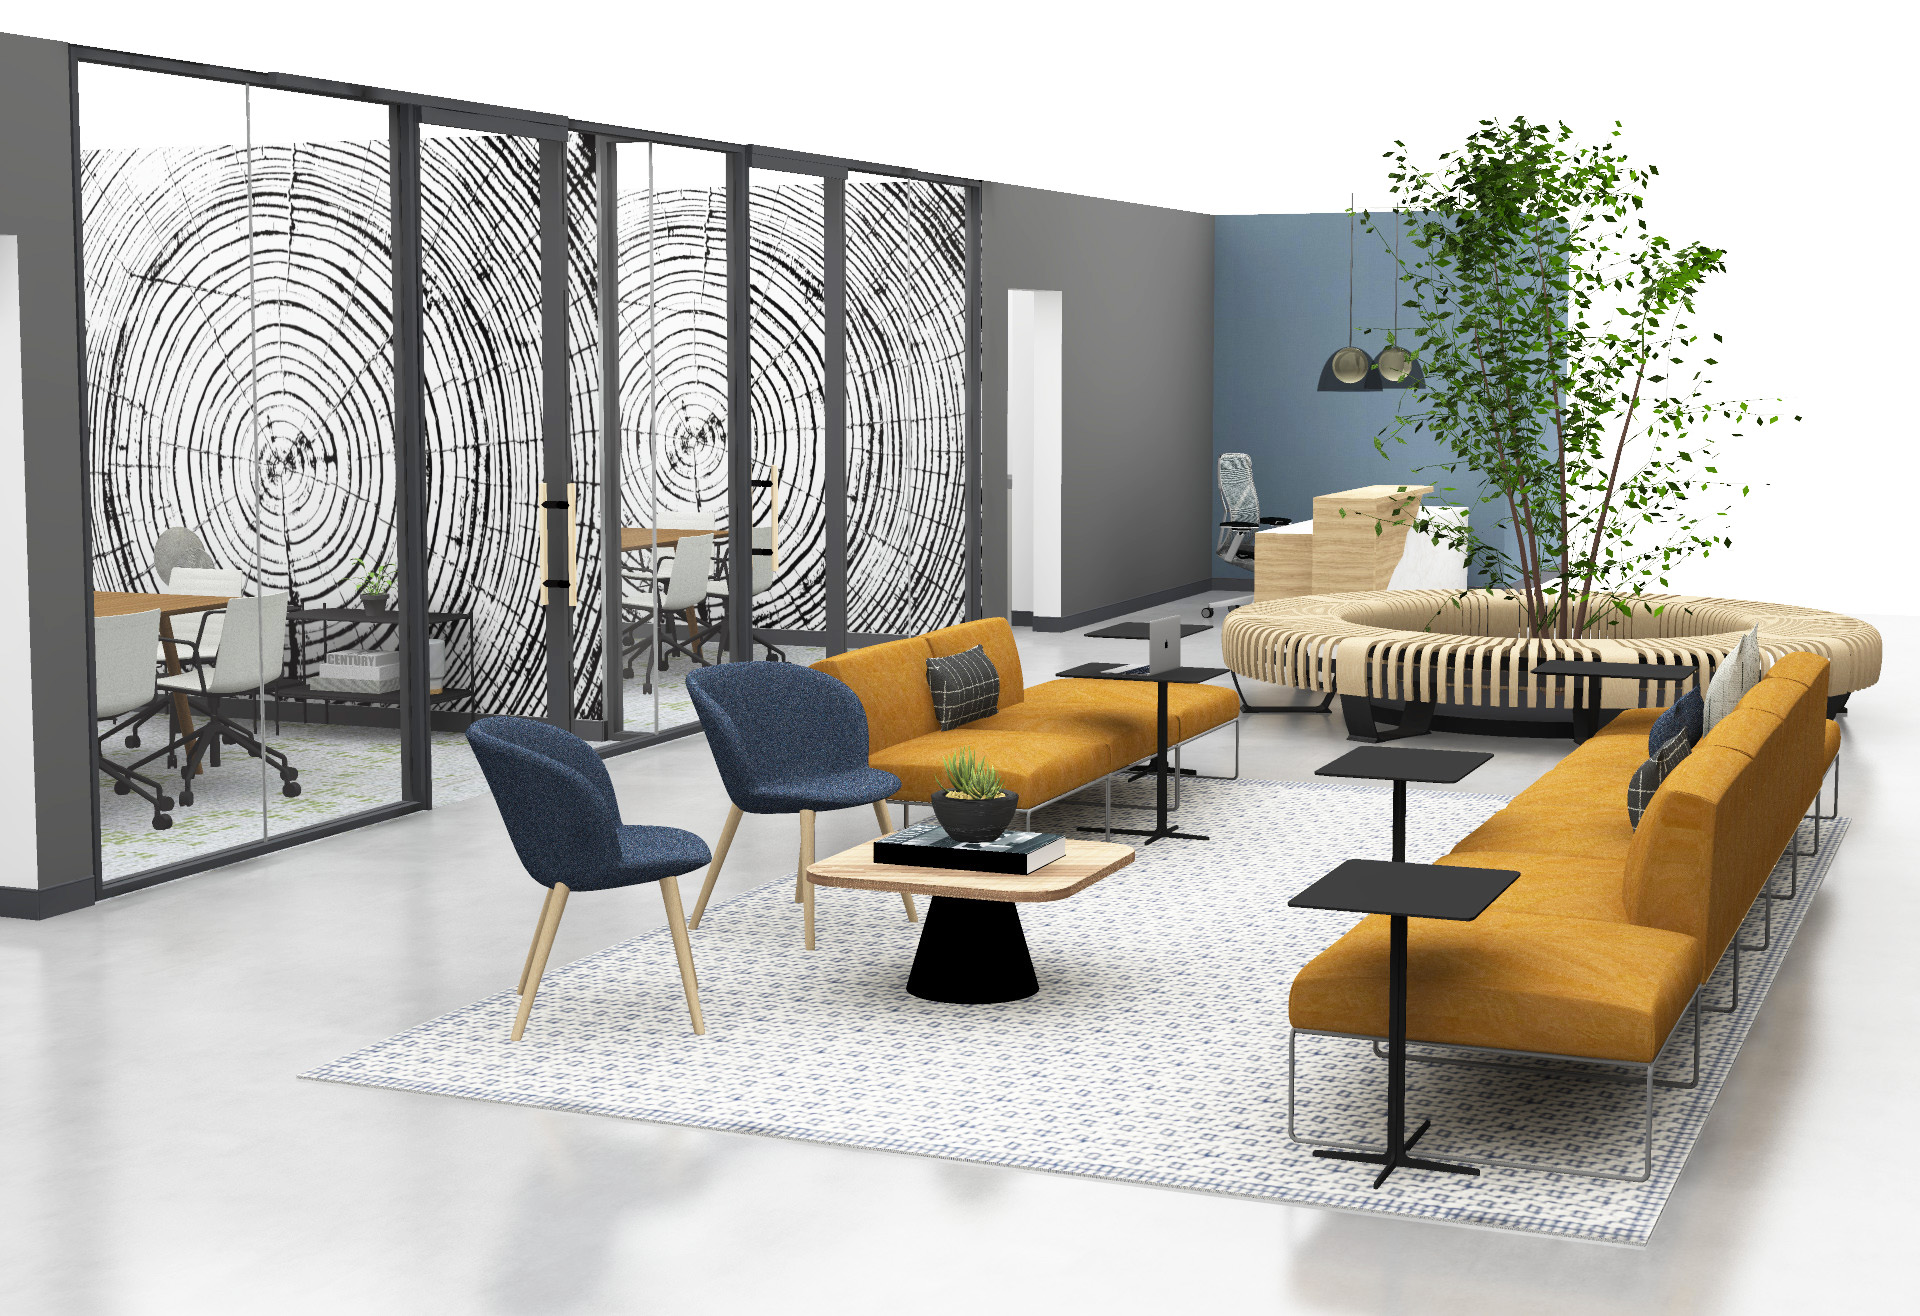 11-2019perkins-willfront-work-lounge.jpg